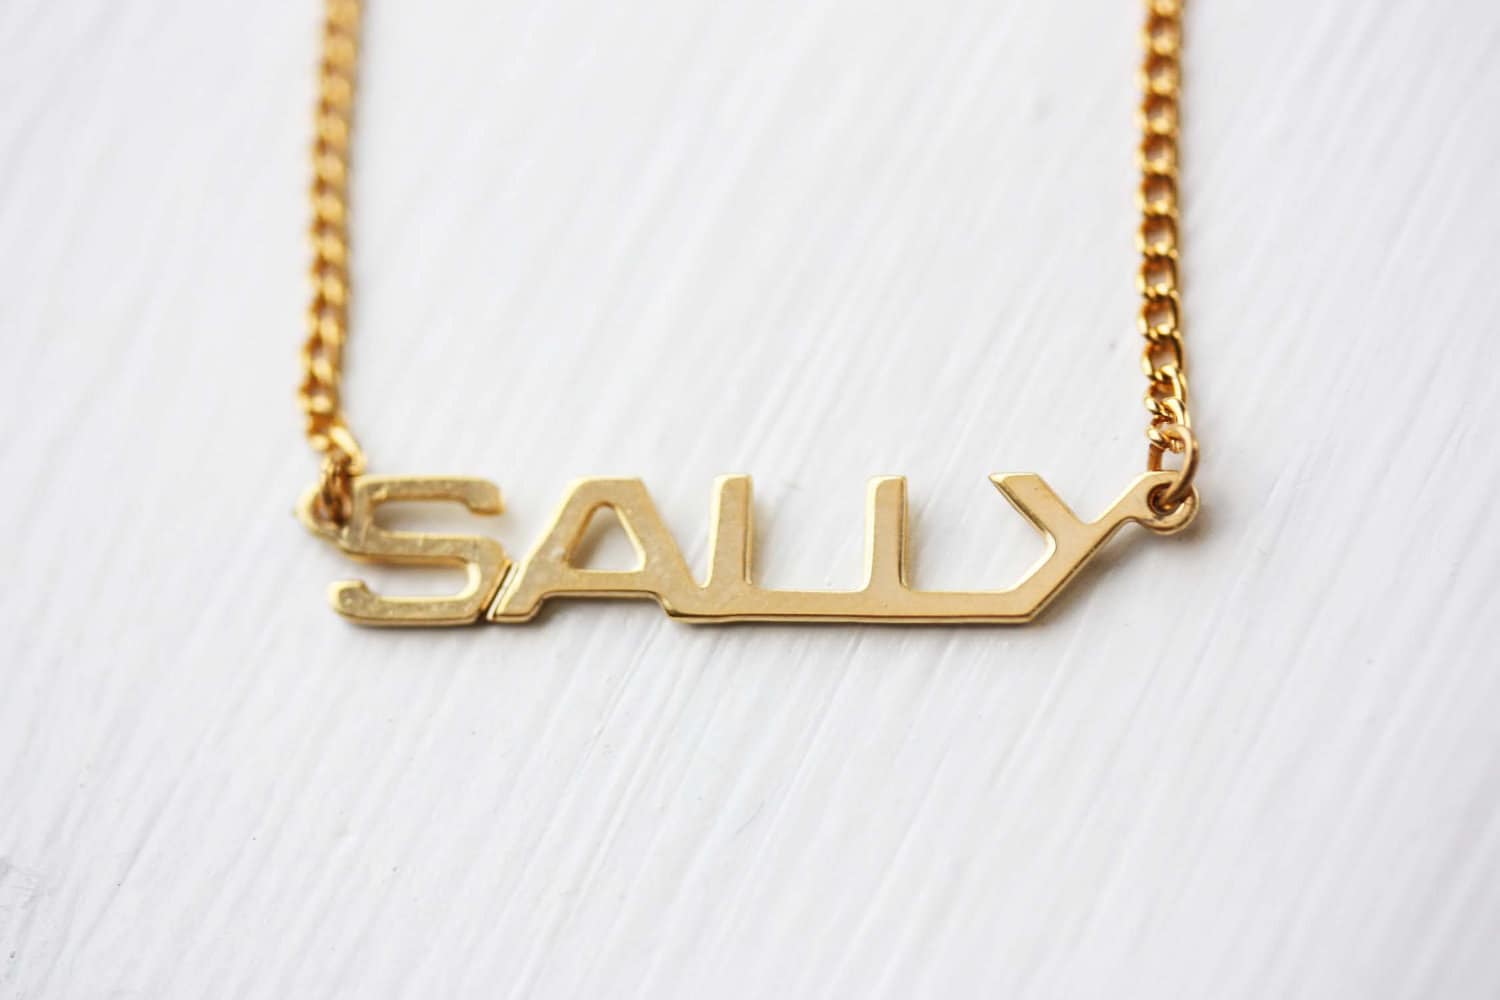 Sally Namenskette Gold, Namenskette, Vintage Goldkette, Halskette von diamentdesigns